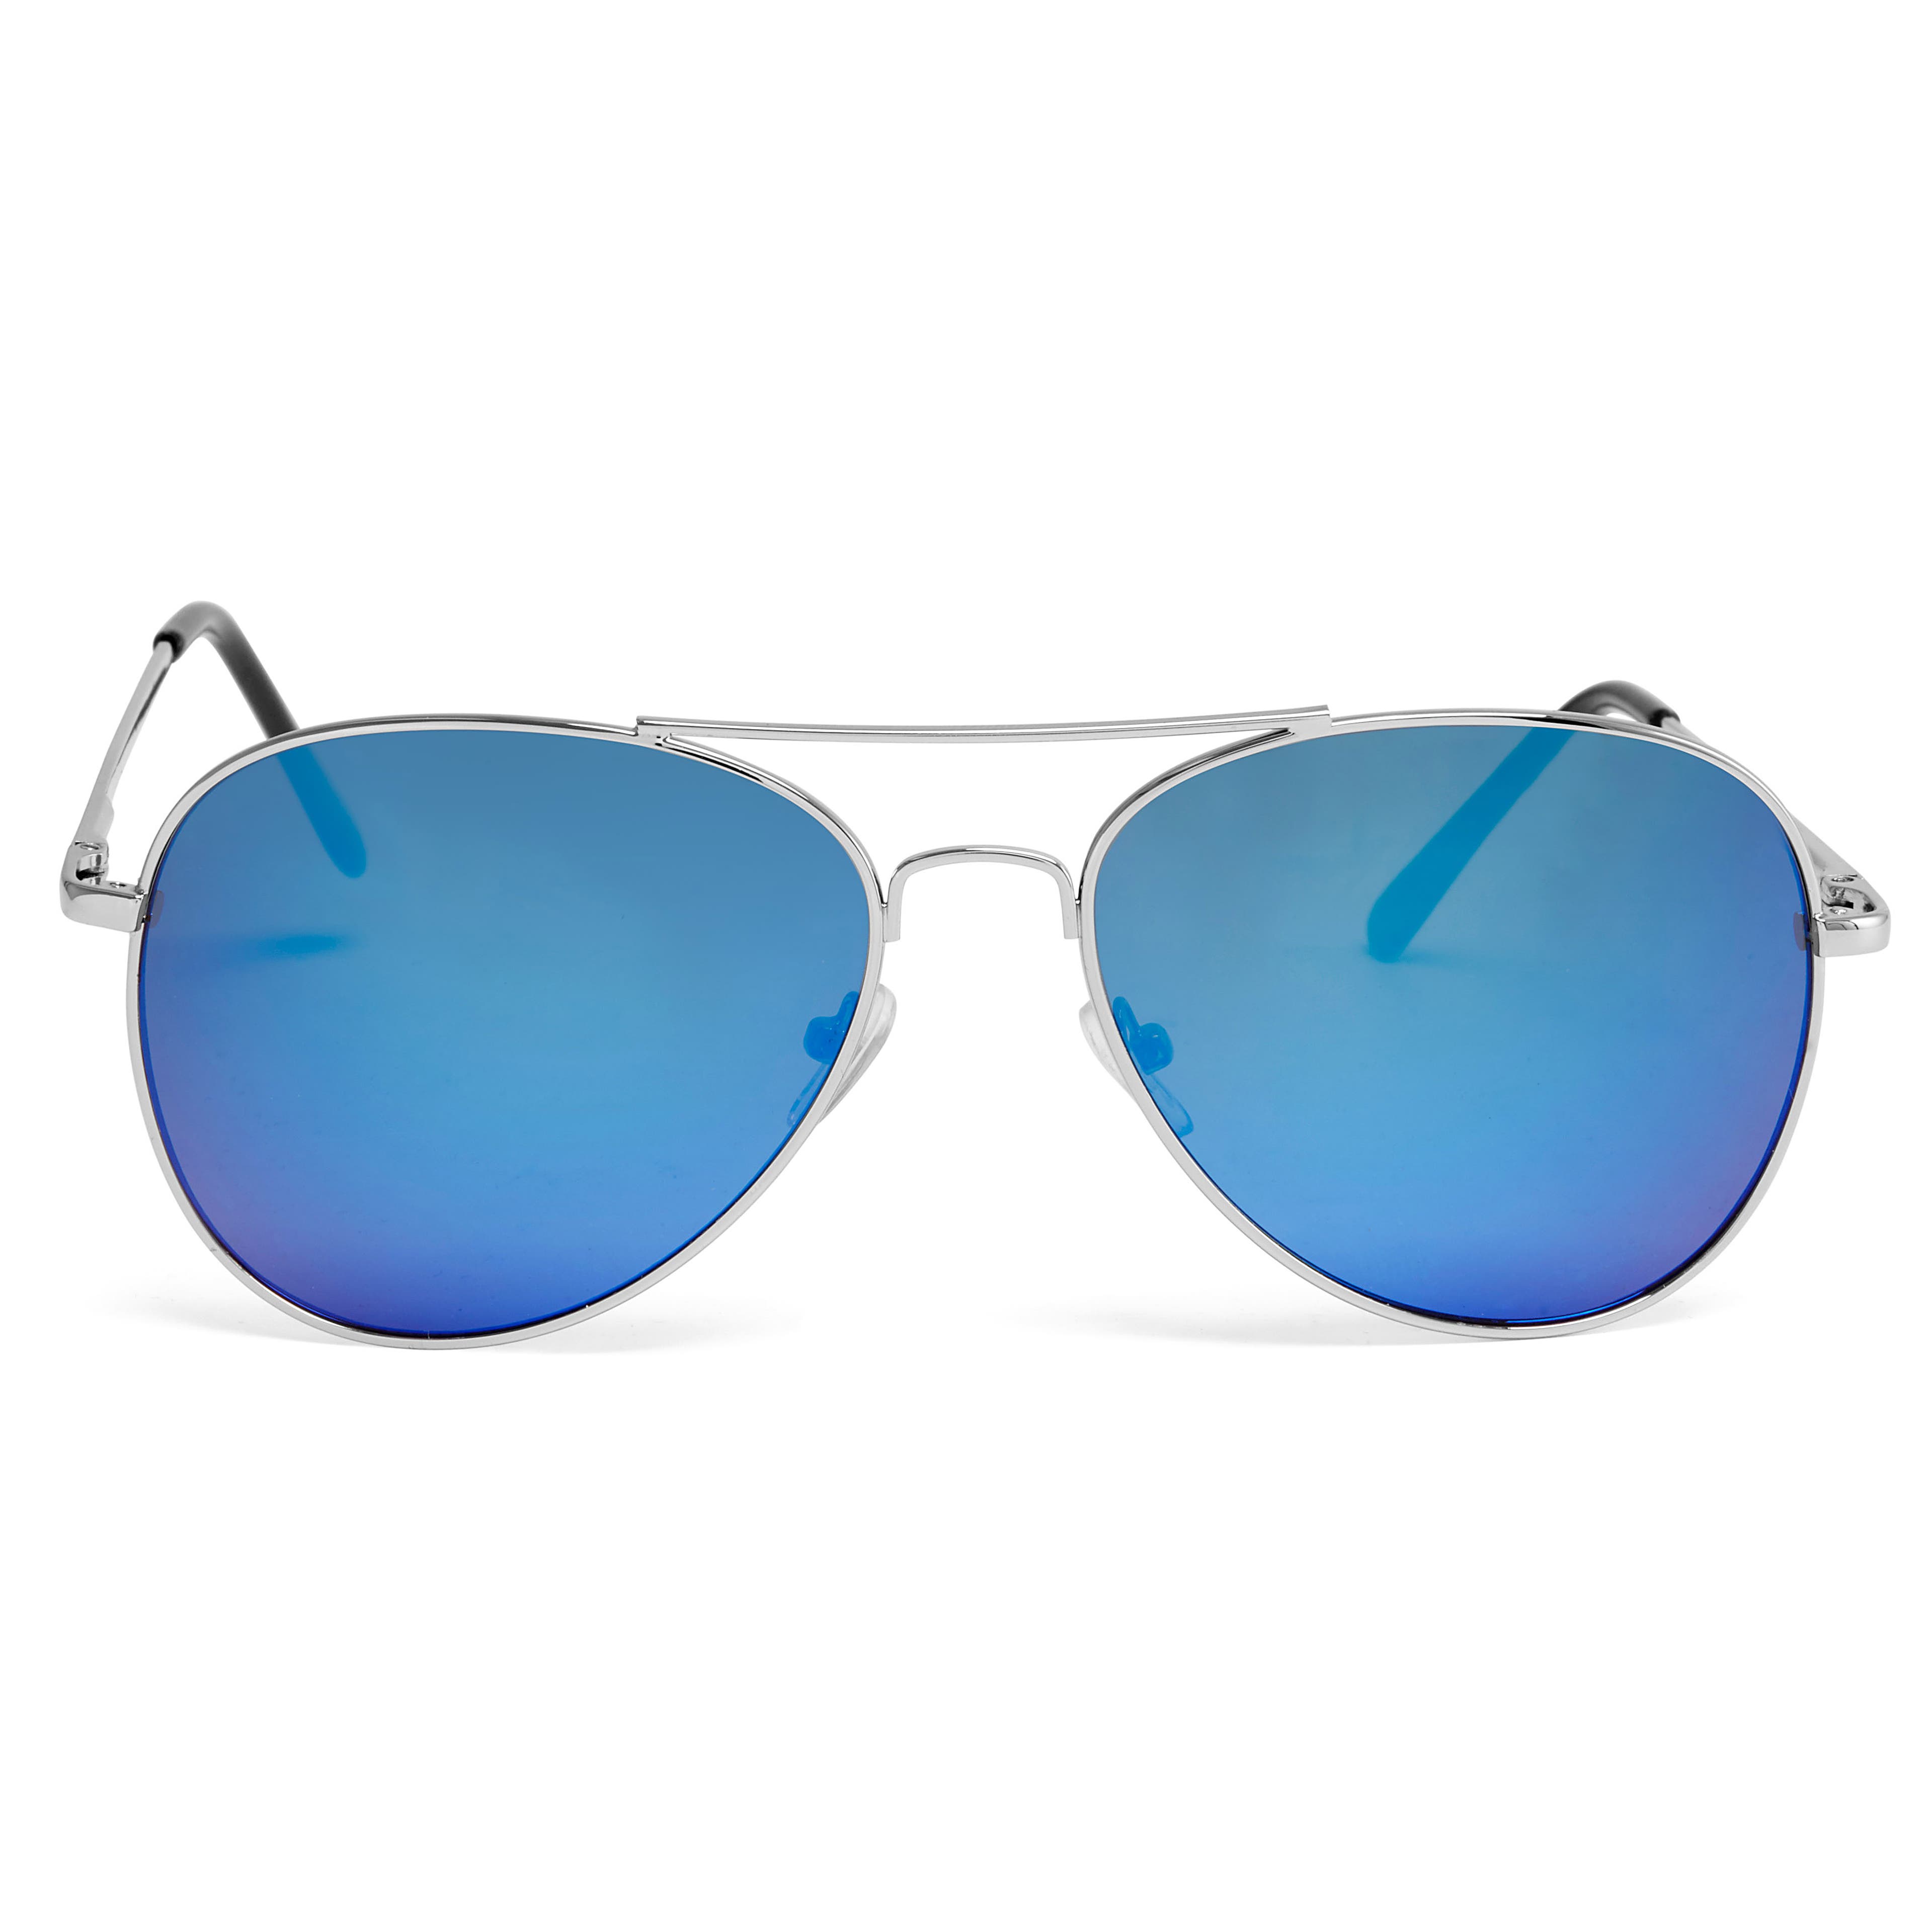 Men's Blue Sunglasses